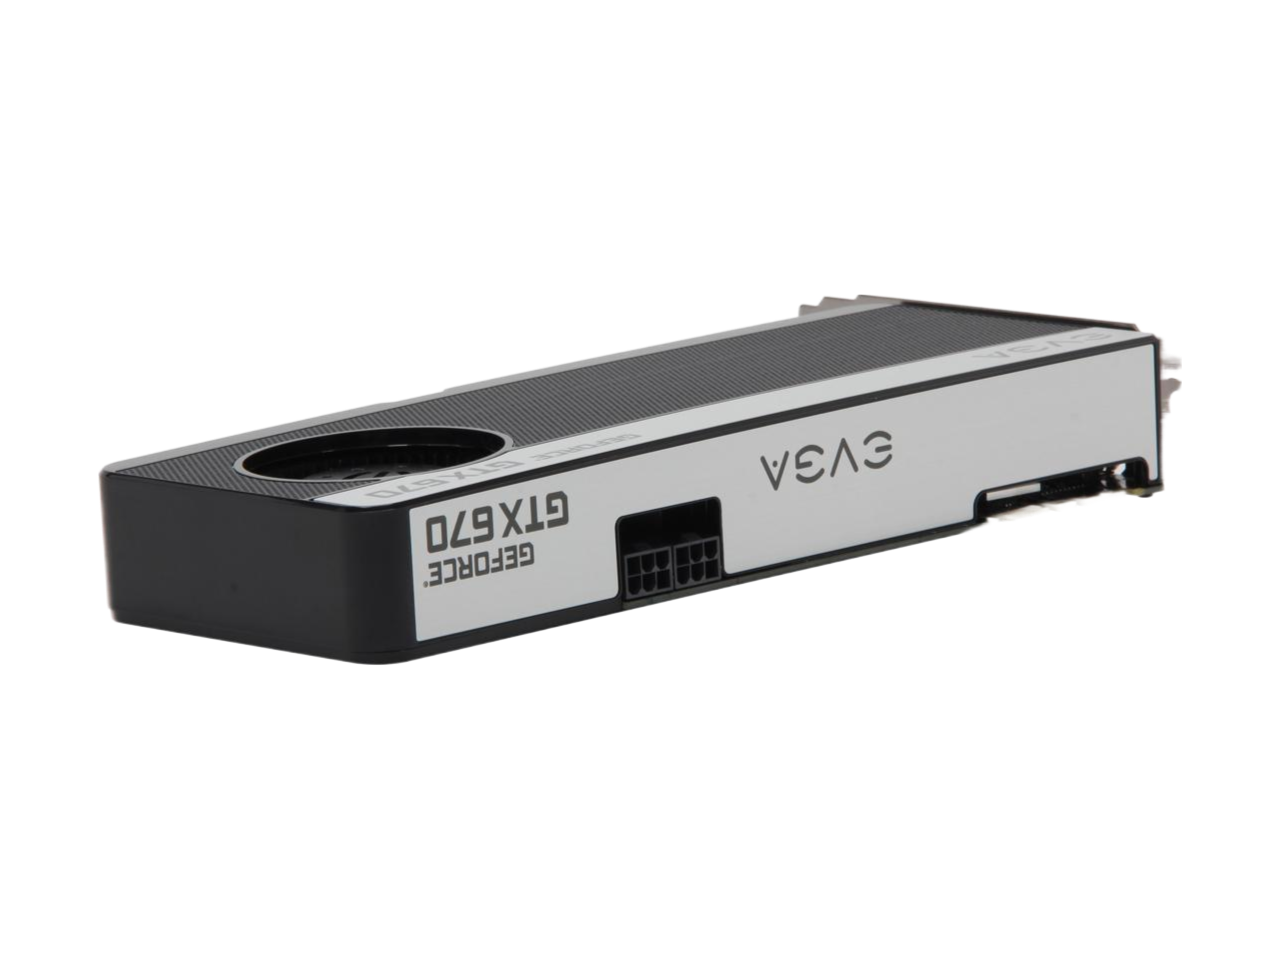 EVGA GeForce GTX 670 2GB GDDR5 PCI Express 3.0 x16 SLI Support Video Card 02G-P4-2670-KR